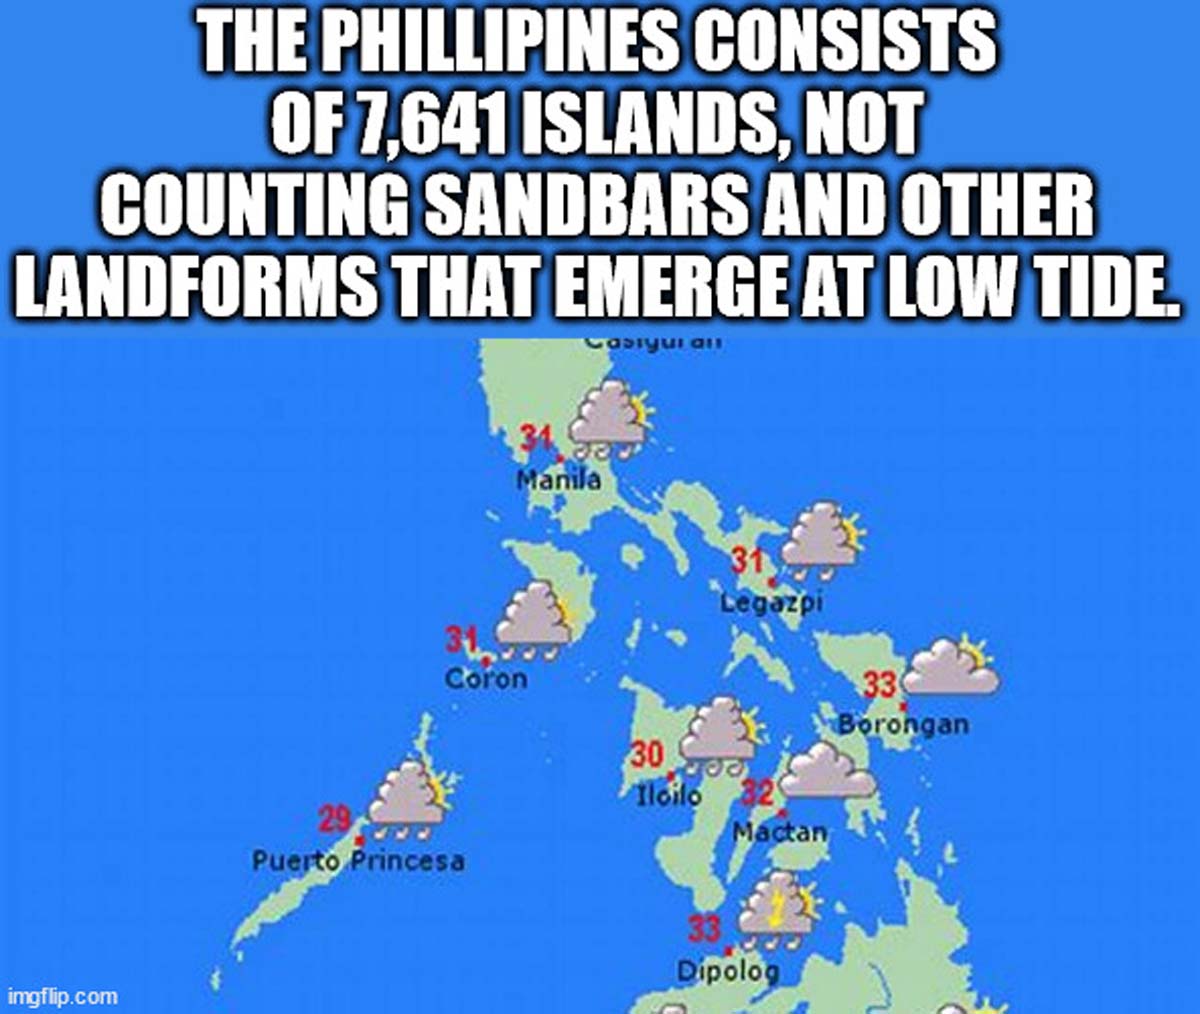 cartoon - The Phillipines Consists Of 7,641 Islands, Not Counting Sandbars And Other Landforms That Emerge At Low Tide. imgflip.com 29 Manila Legazpi Coron 33 Borongan 30 Iloilo Puerto Princesa Mactan Dipolog